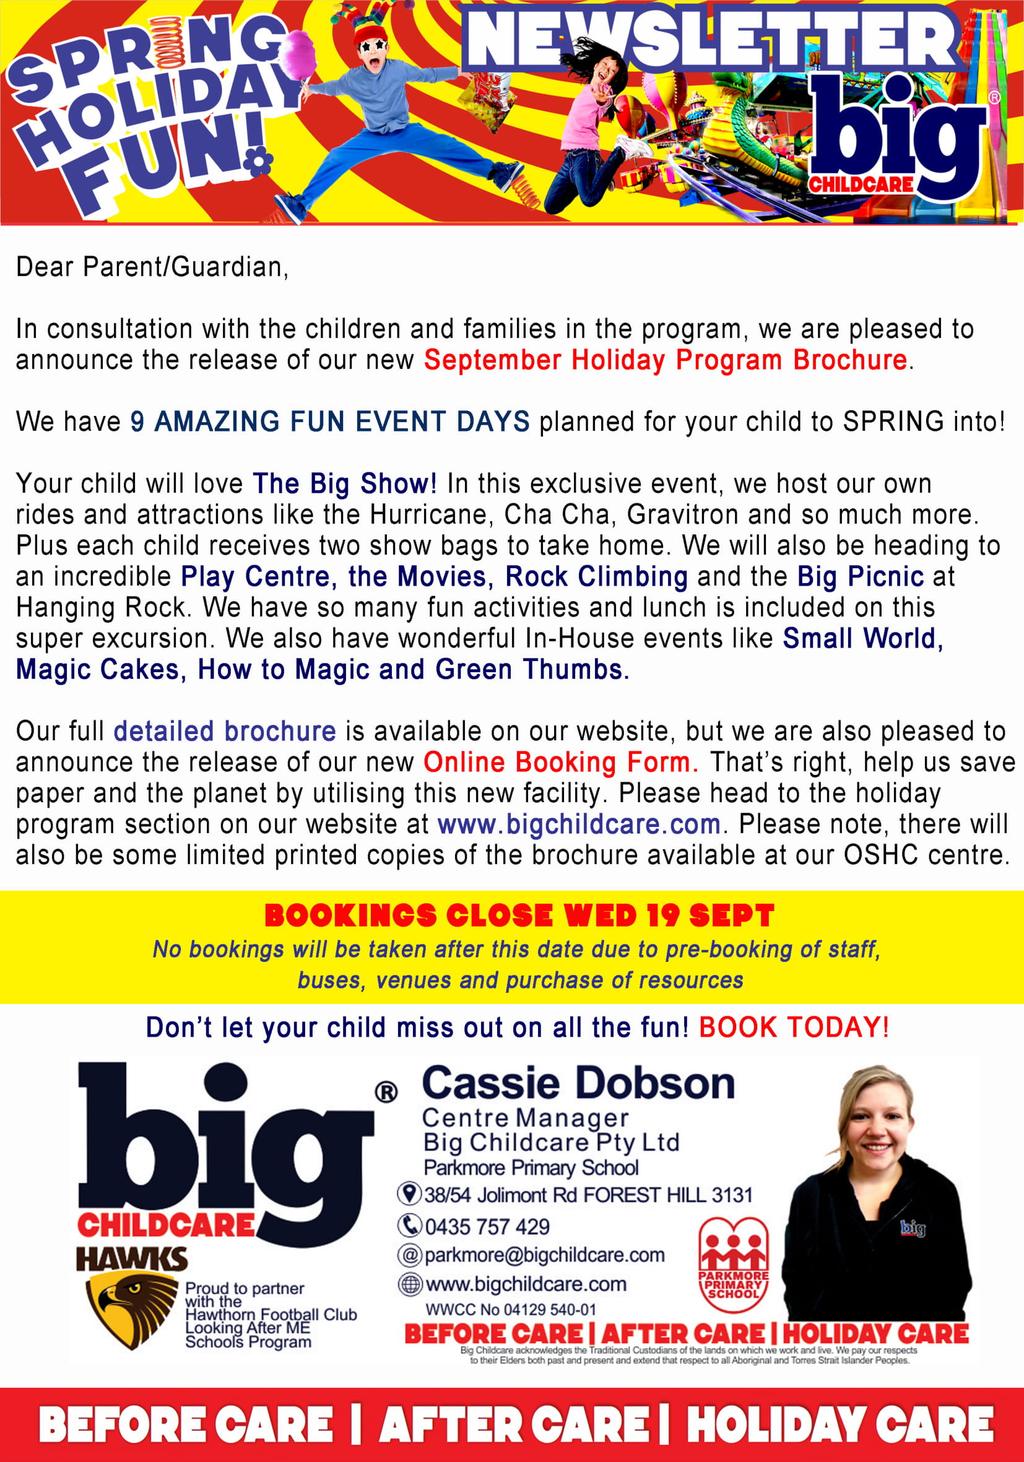 Big Childcare (C) THE PARKMORE